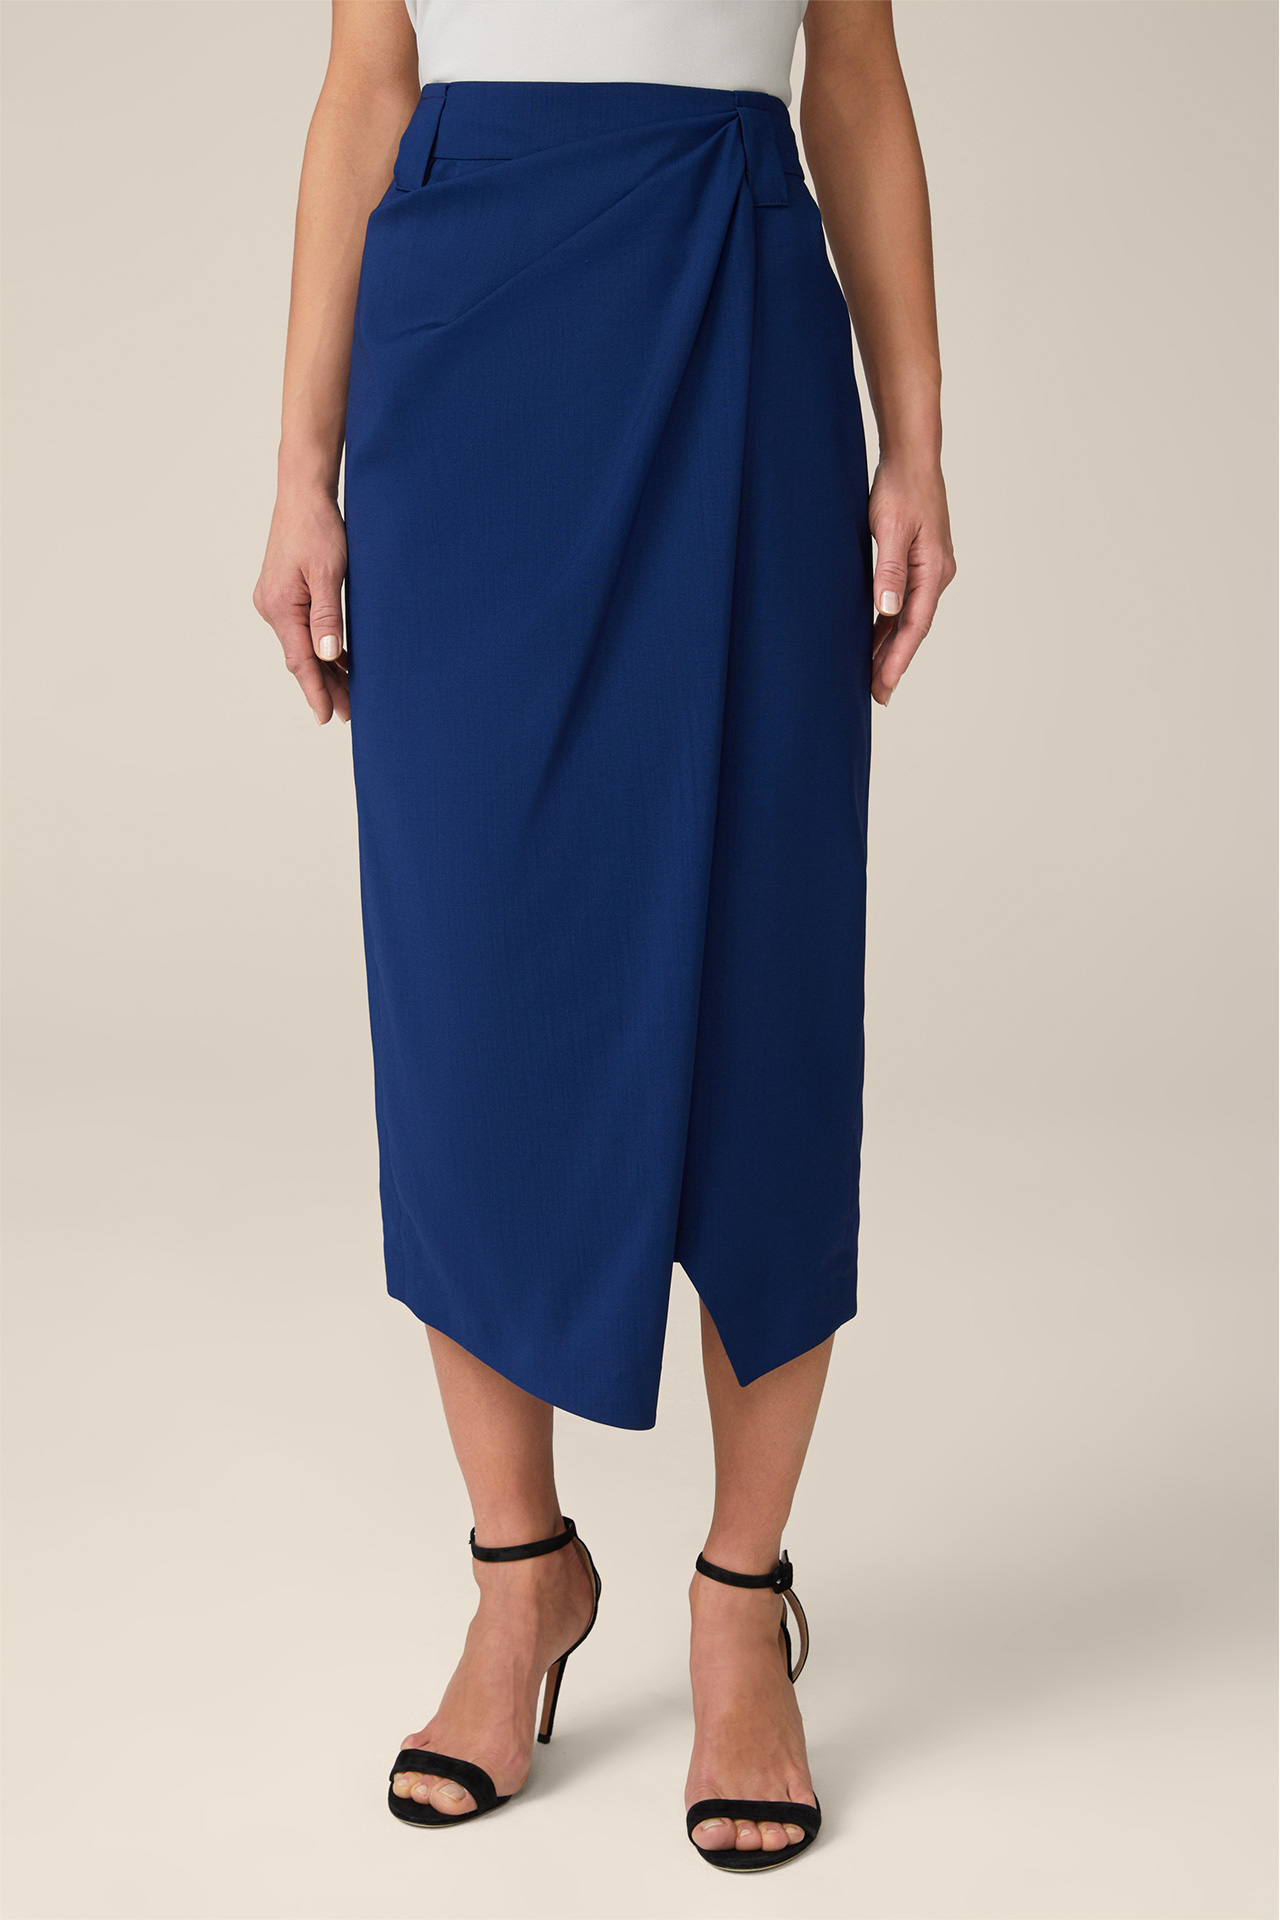 Virgin Wool Midi Length Skirt with Wrapover in Blue